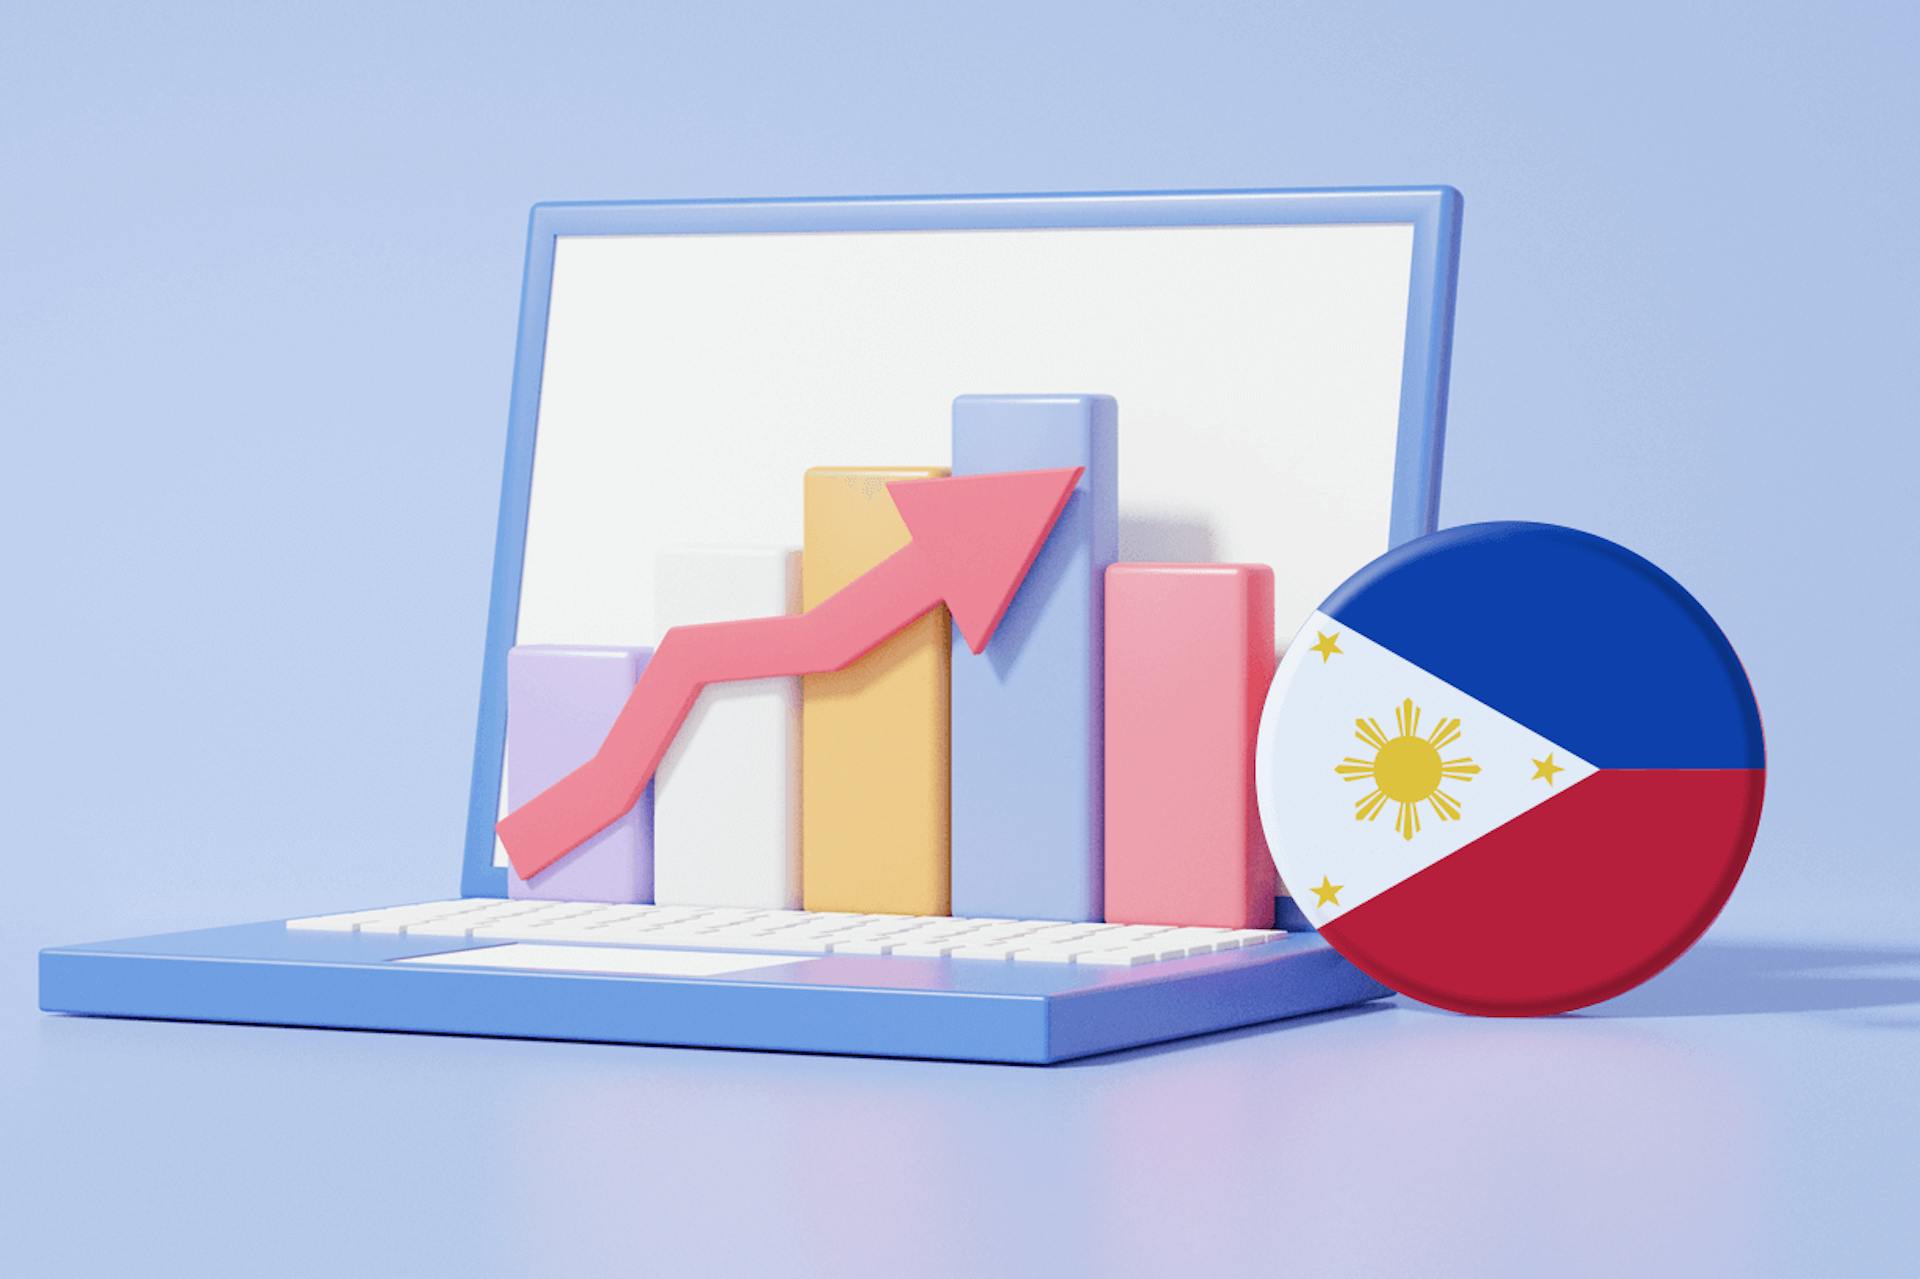 3D Illustrations of social media statistics in the Philippines